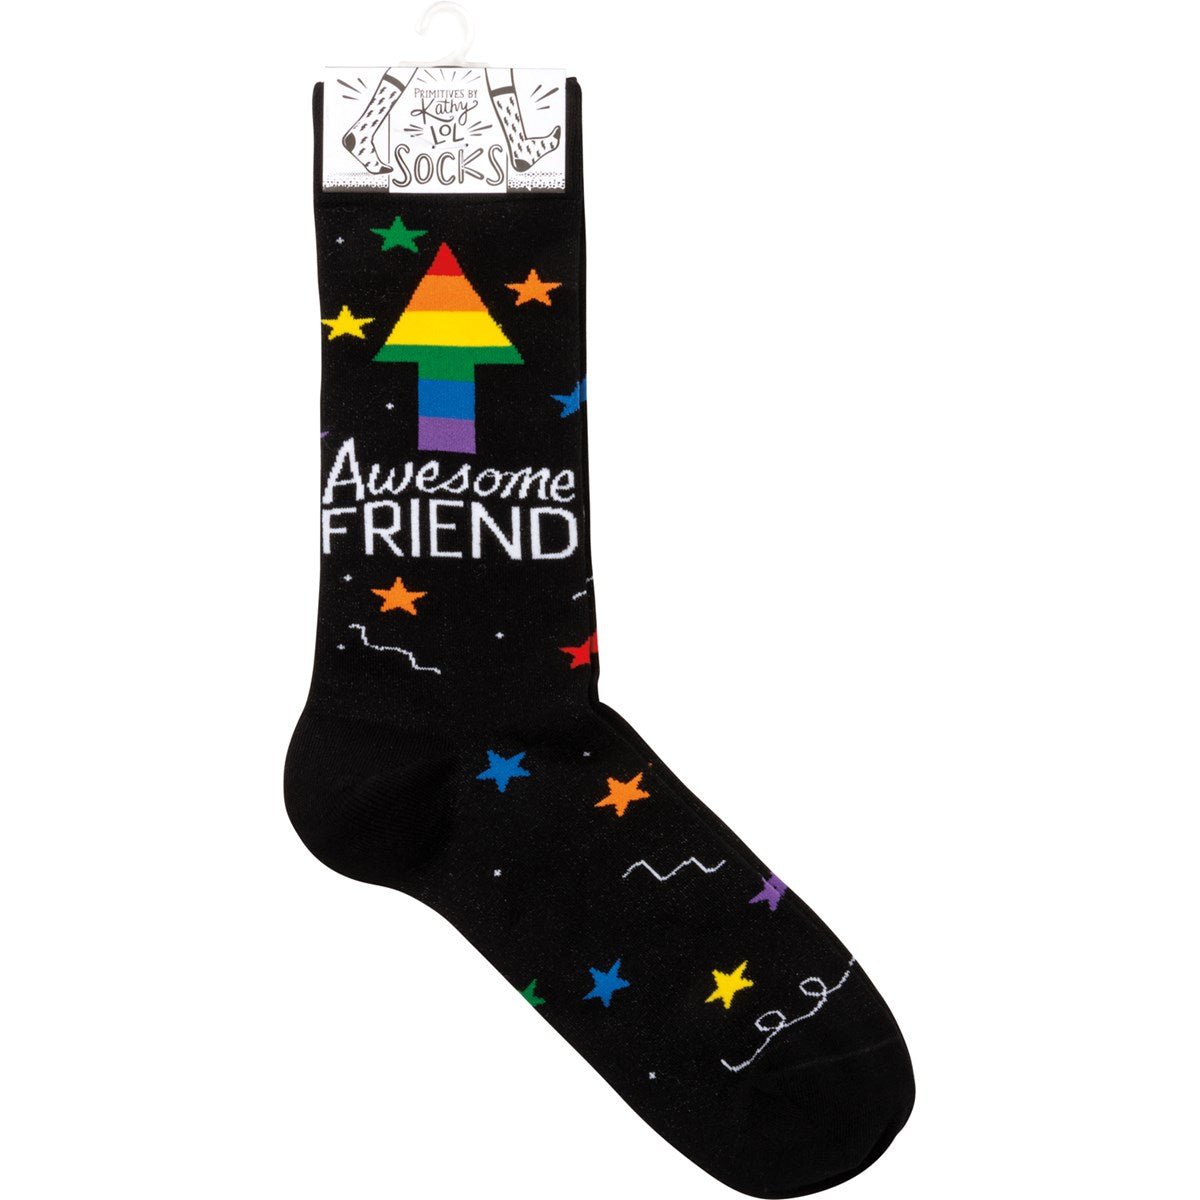 Awesome Friend Stars Patterned Socks Black Colorful Funny Novelty Socks